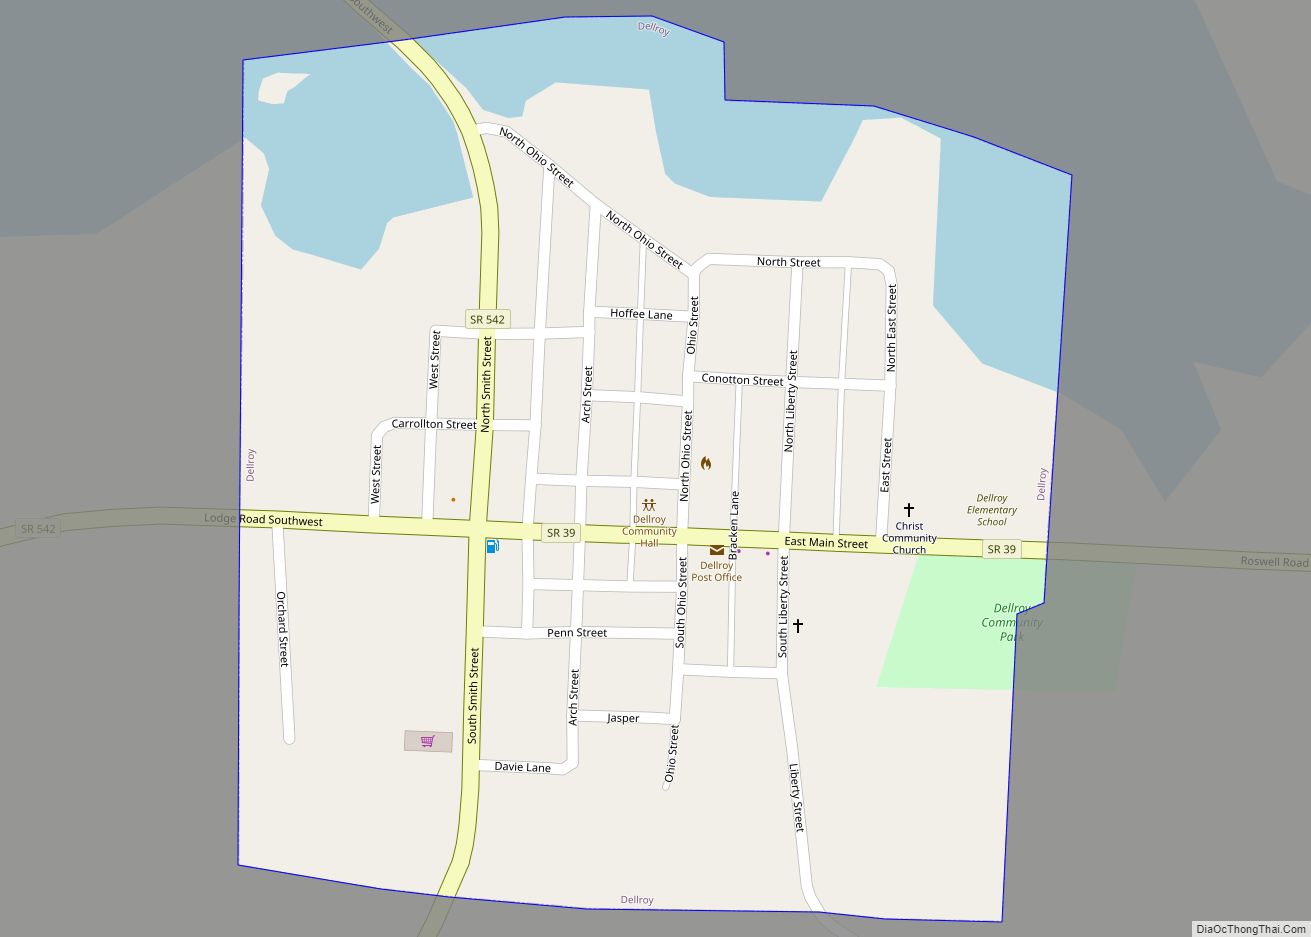 Map of Dellroy village